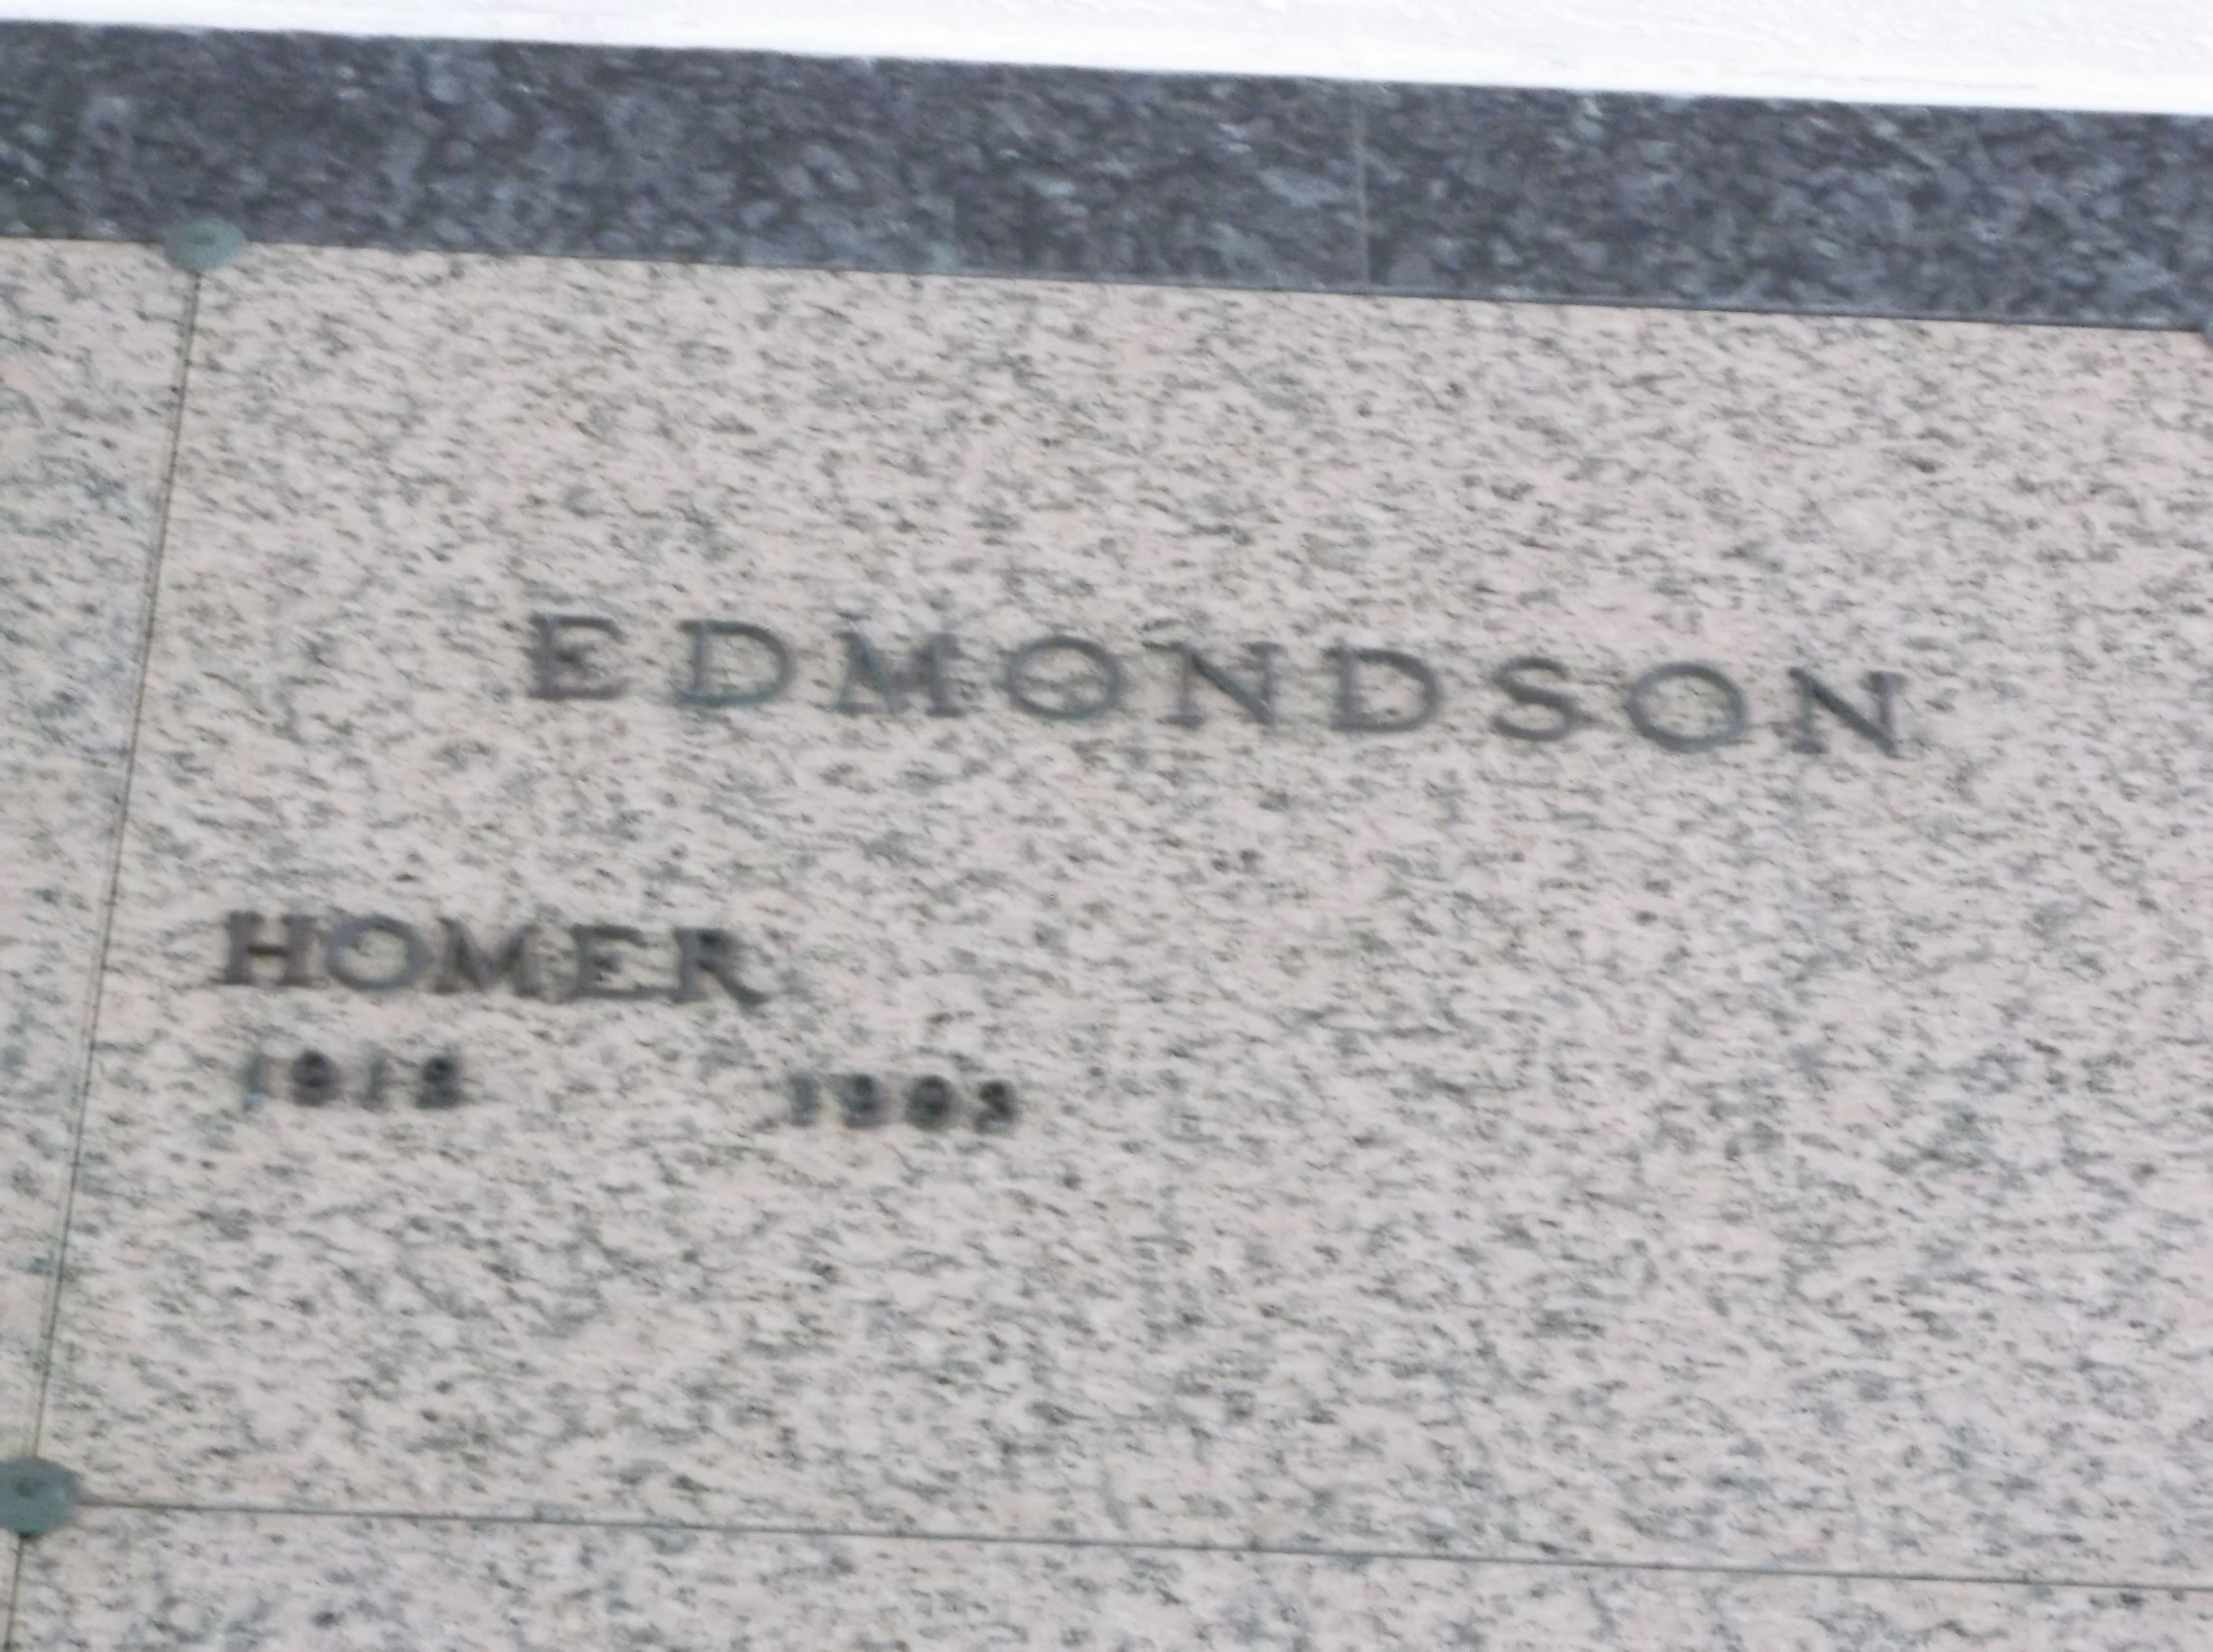 Homer Edmondson